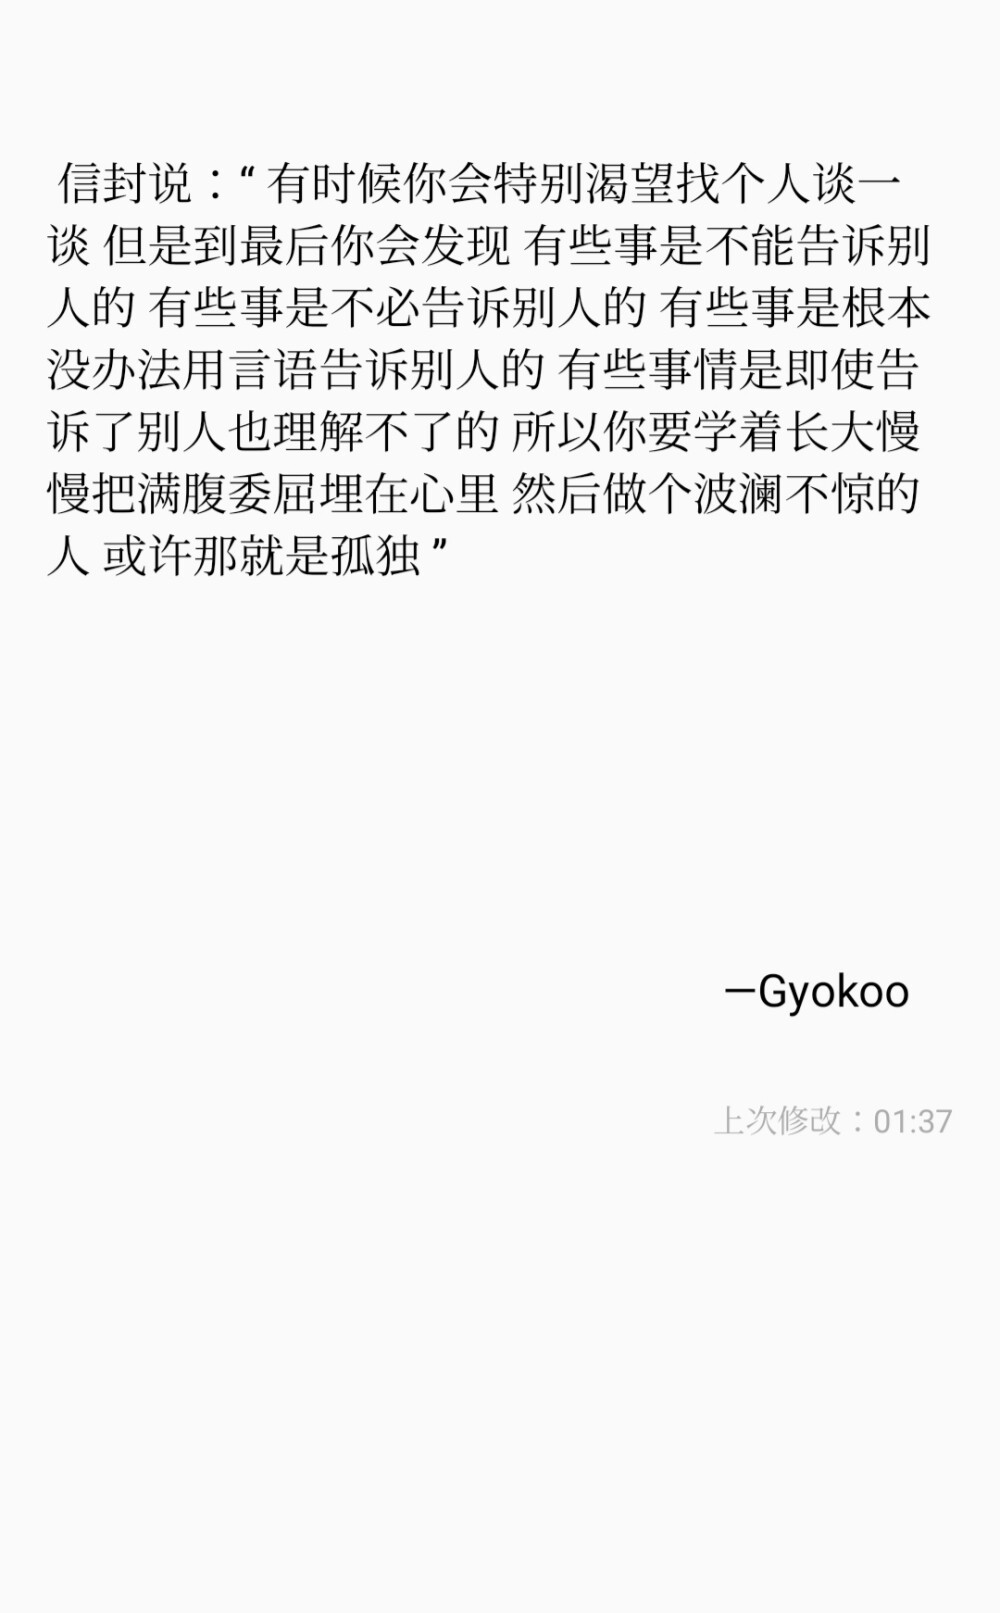 Gyokooの备忘录 歌词 手写句子 英文 背景图片